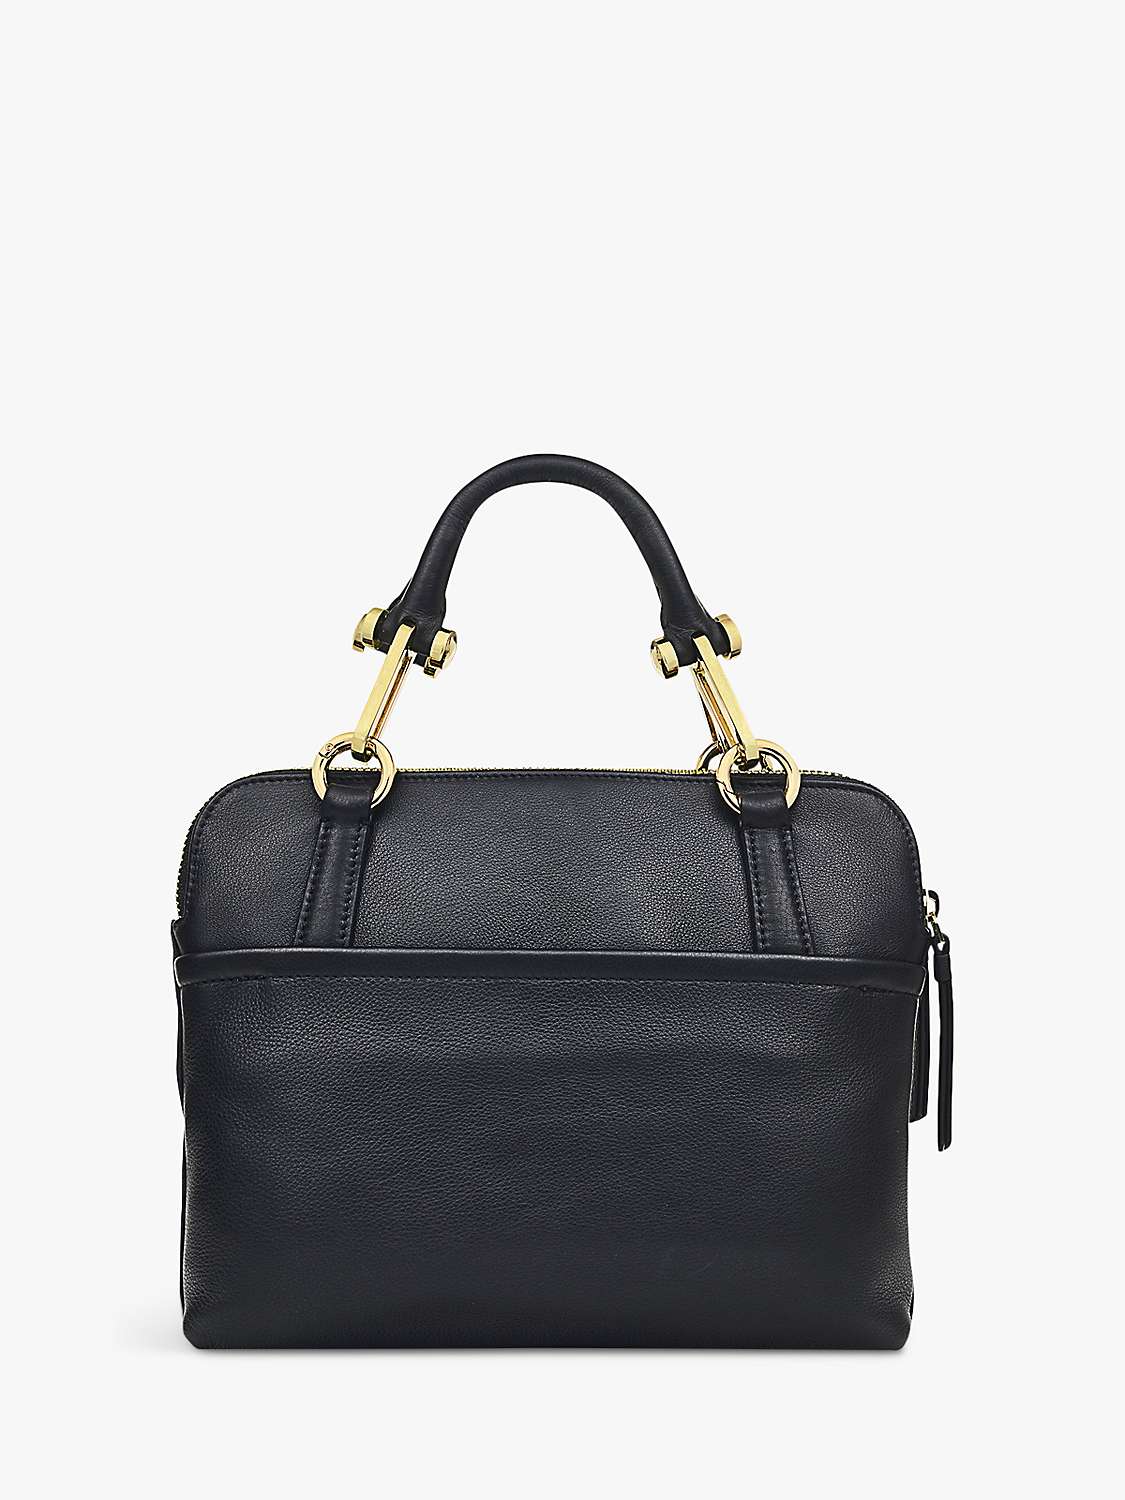 Buy Radley Commute Street Medium Leather Grab Bag, Black Online at johnlewis.com